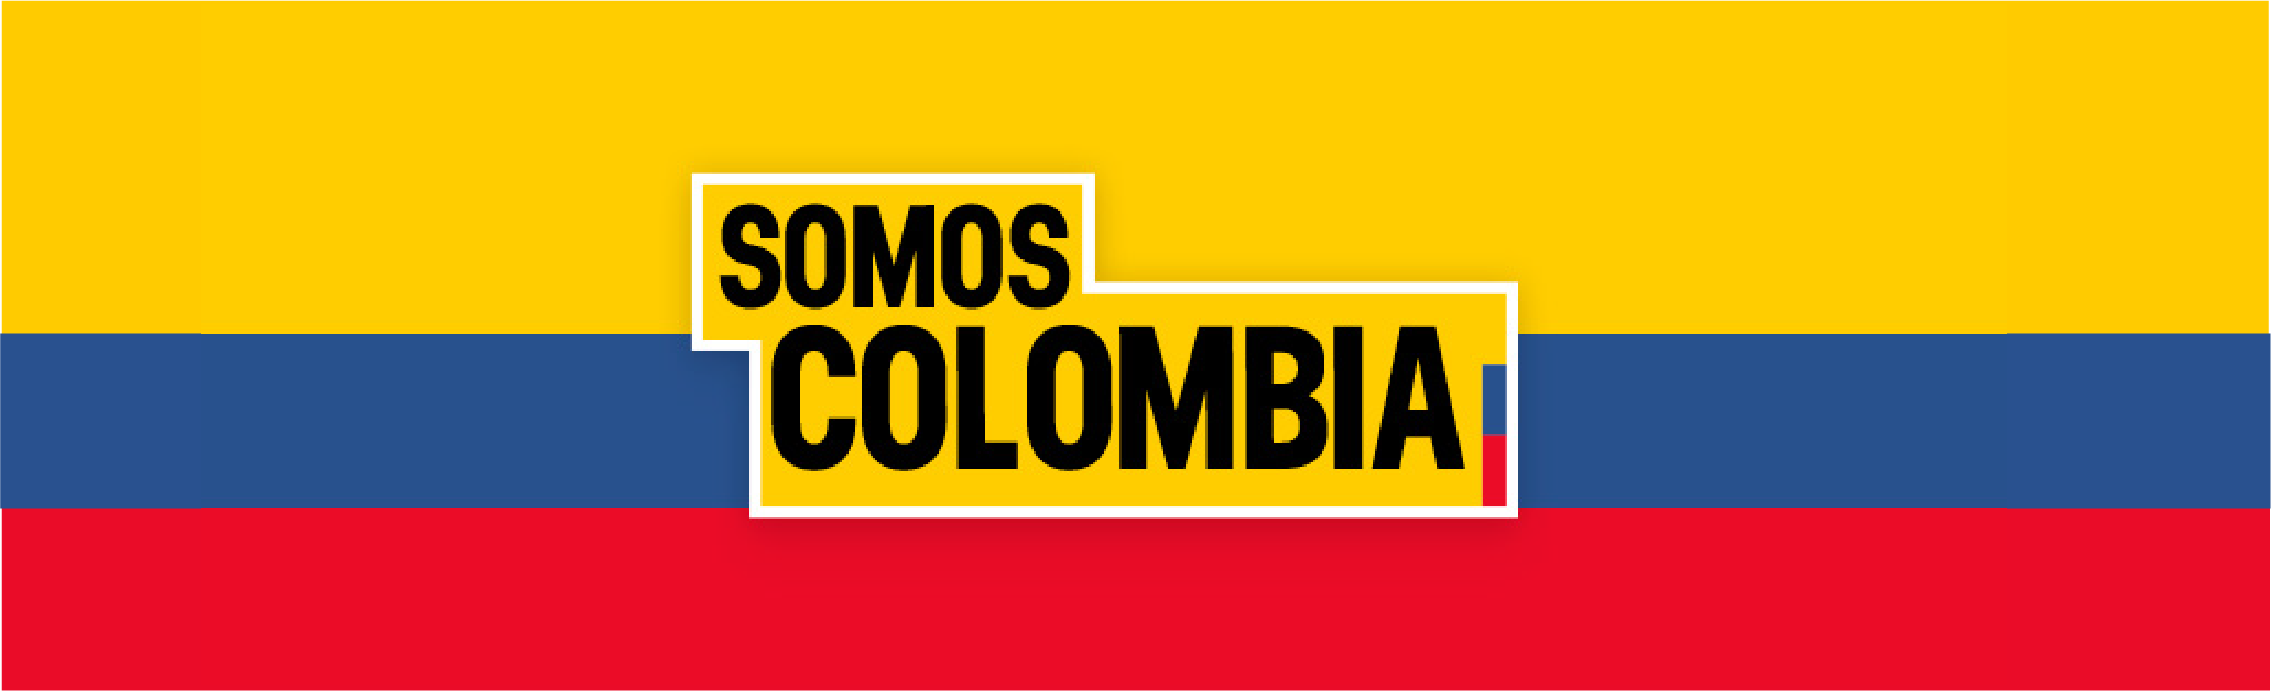 #SomosColombia